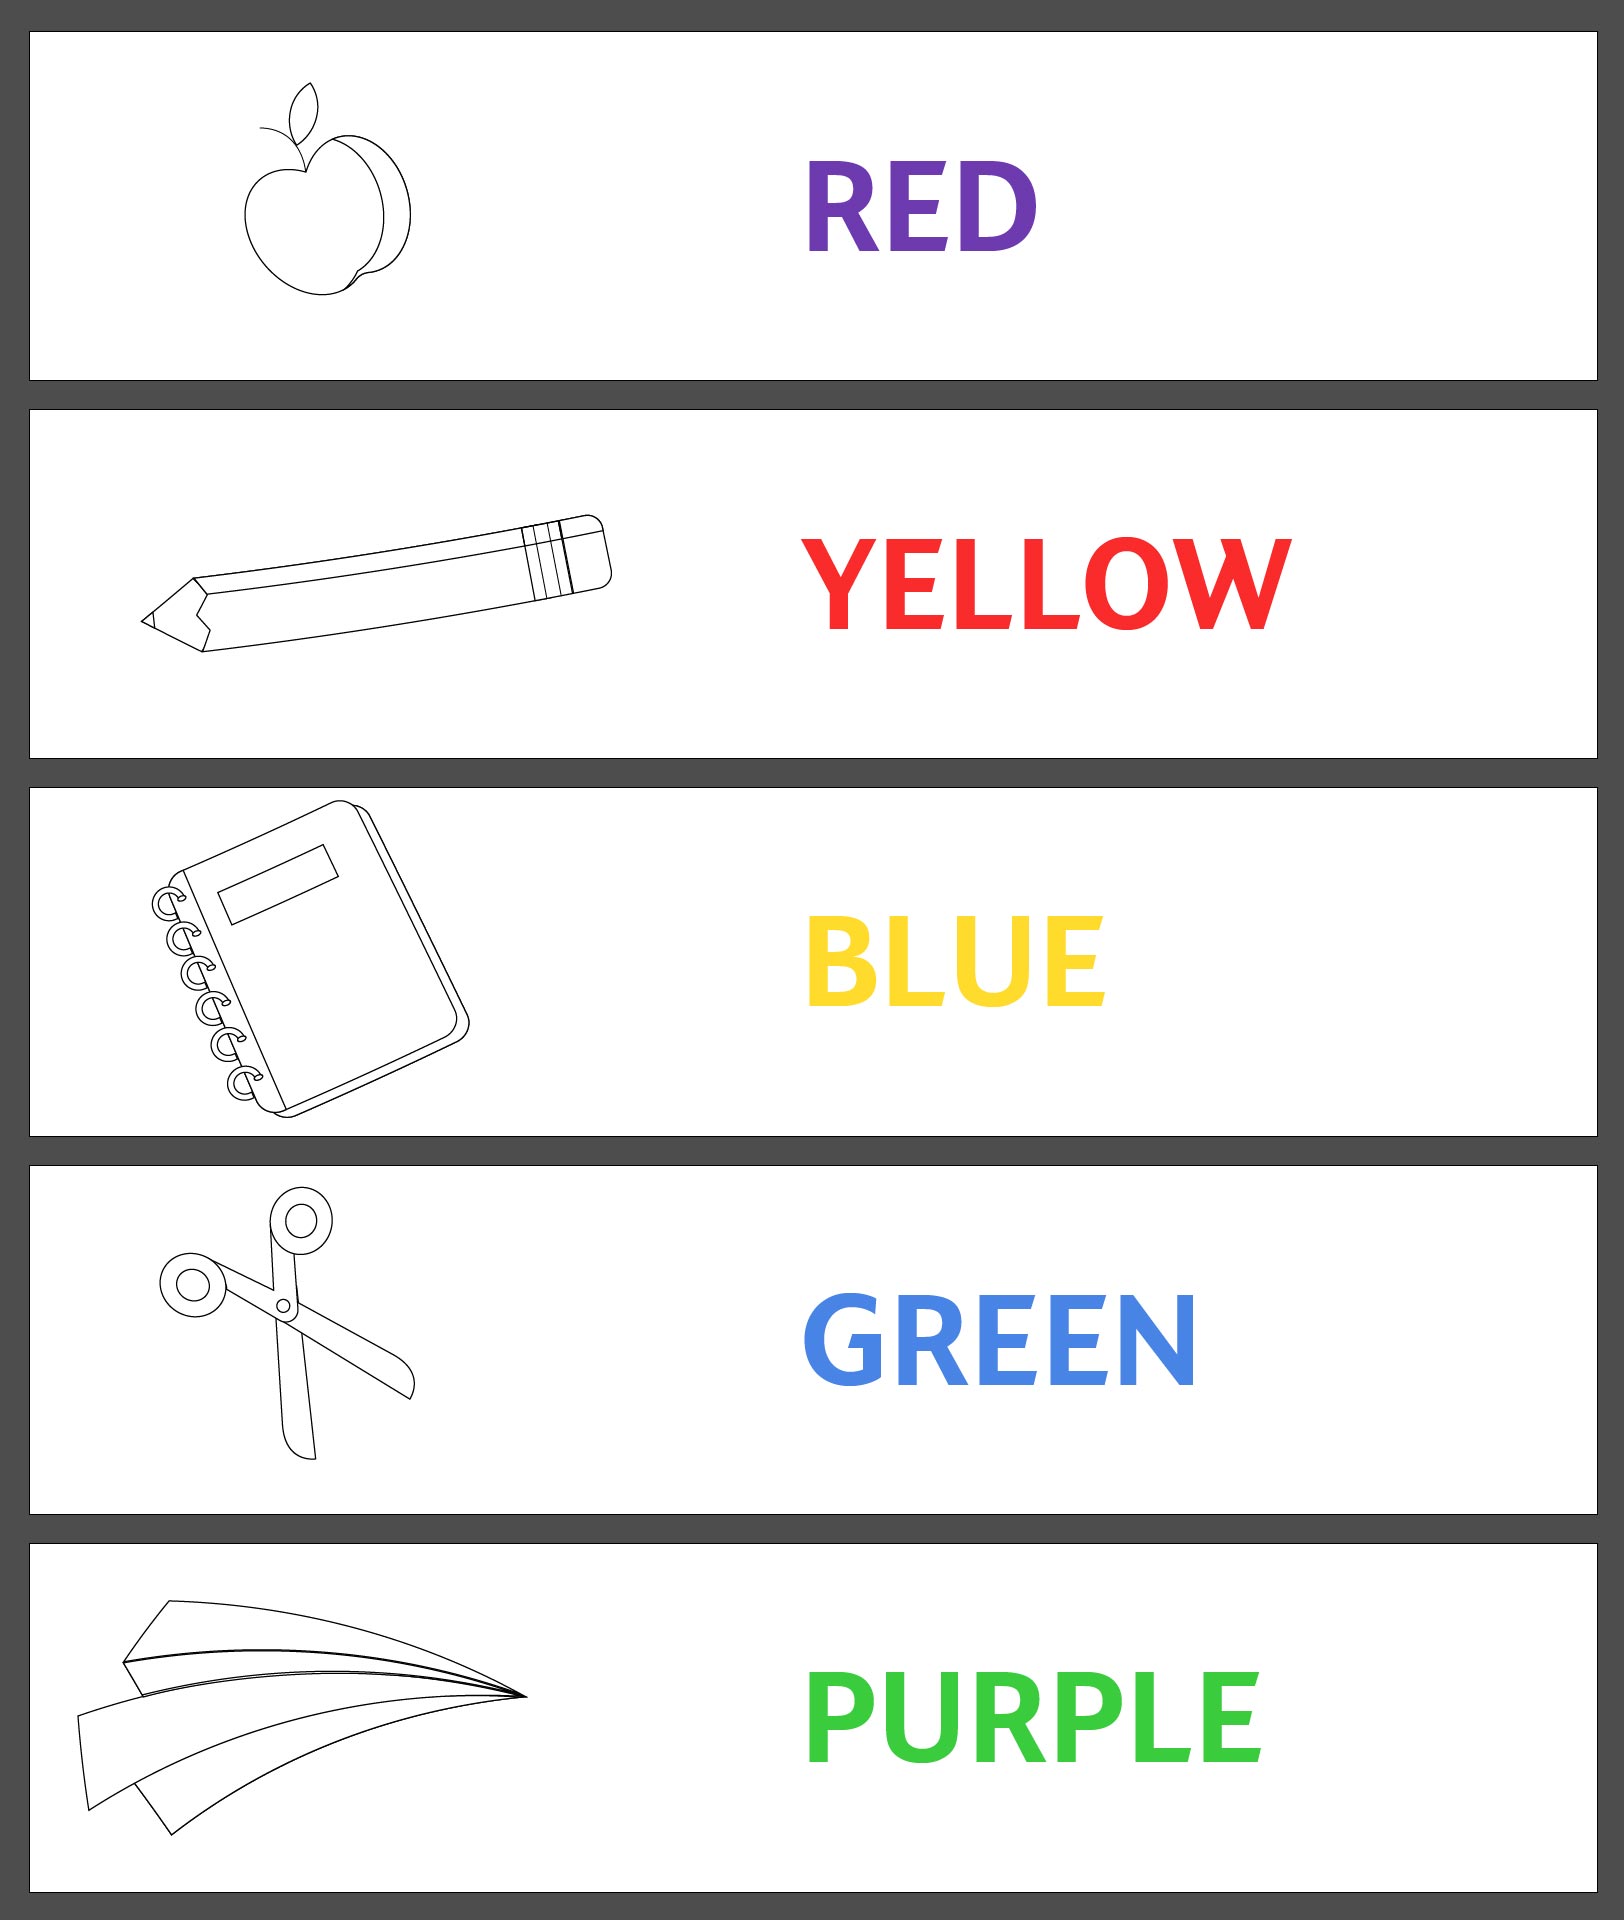 Kindergarten Color Words Worksheets